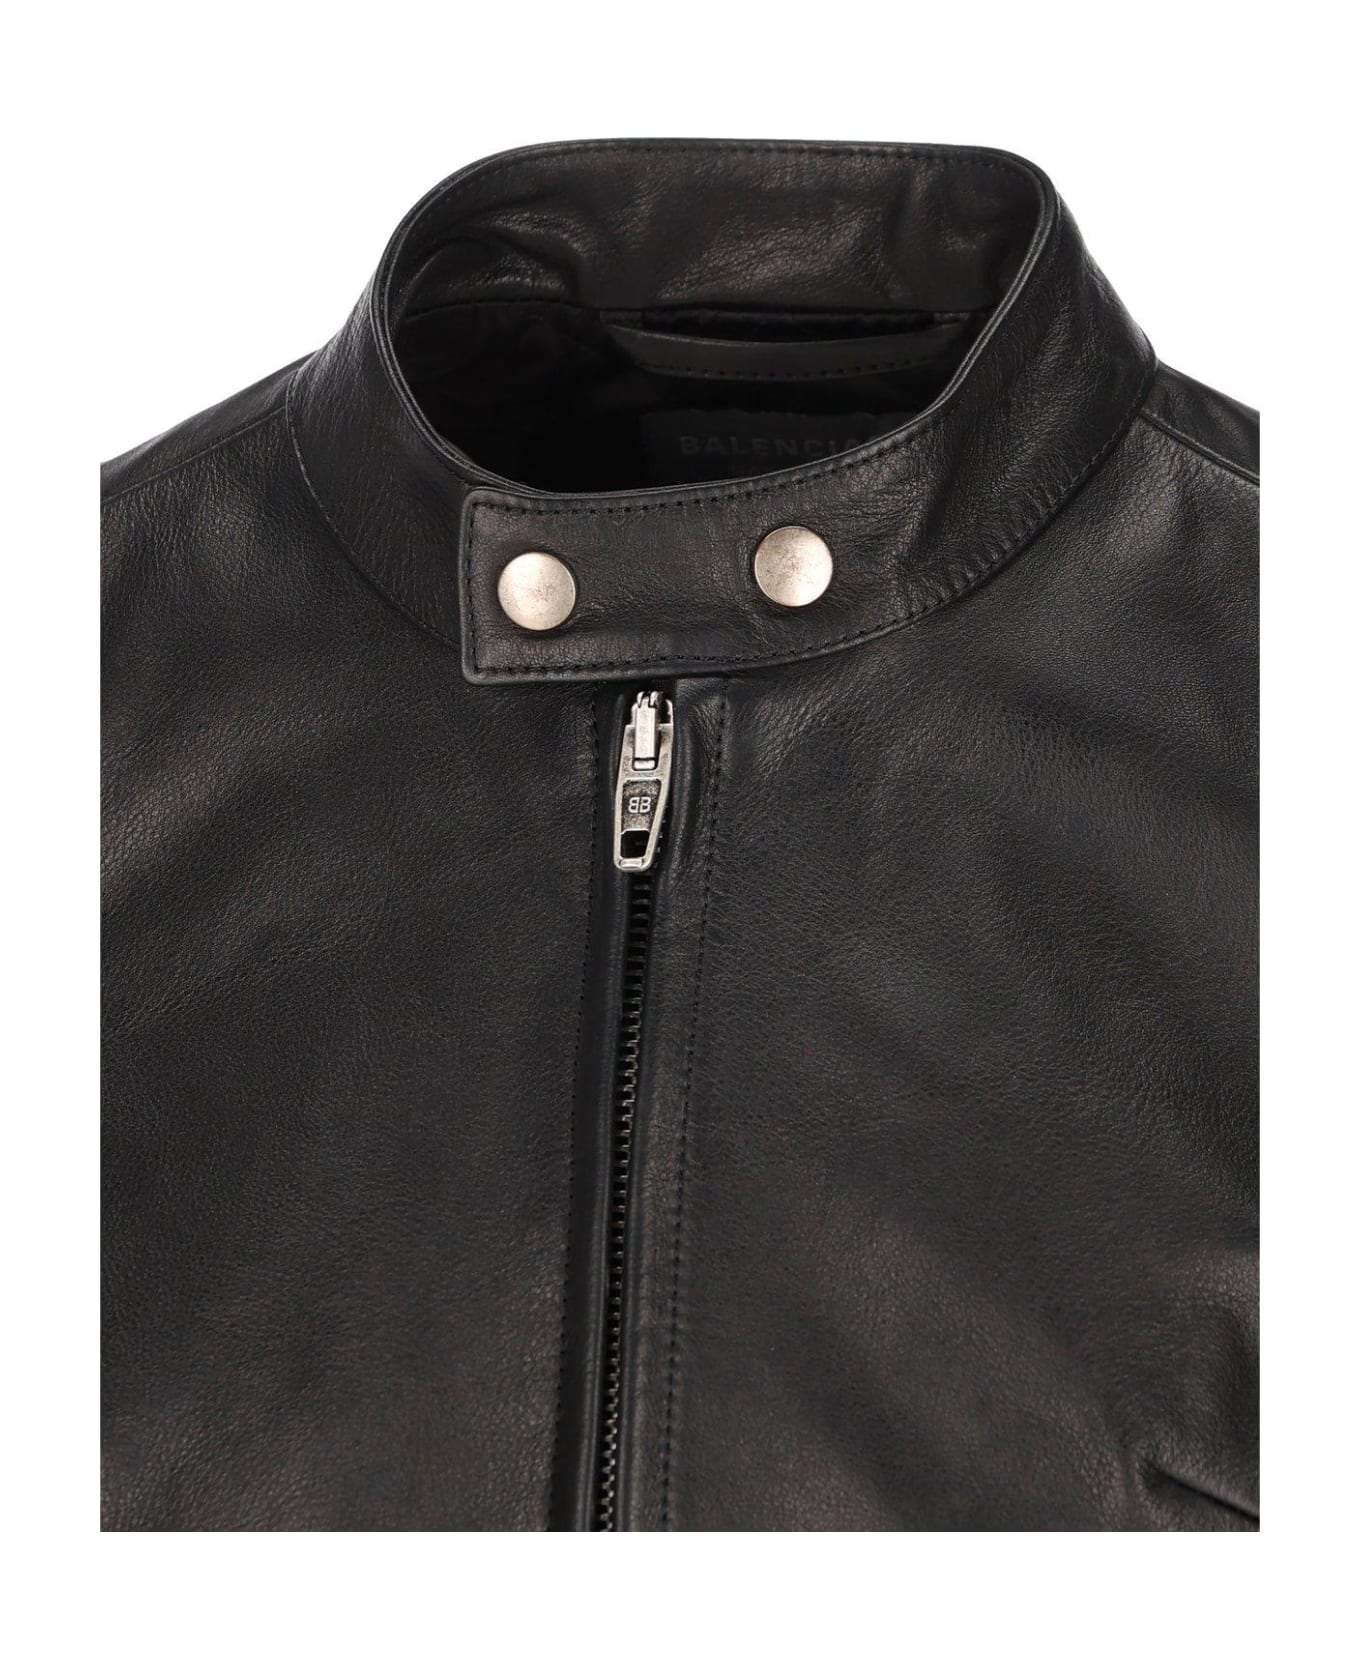 Balenciaga Racer Leather Jacket - BLACK